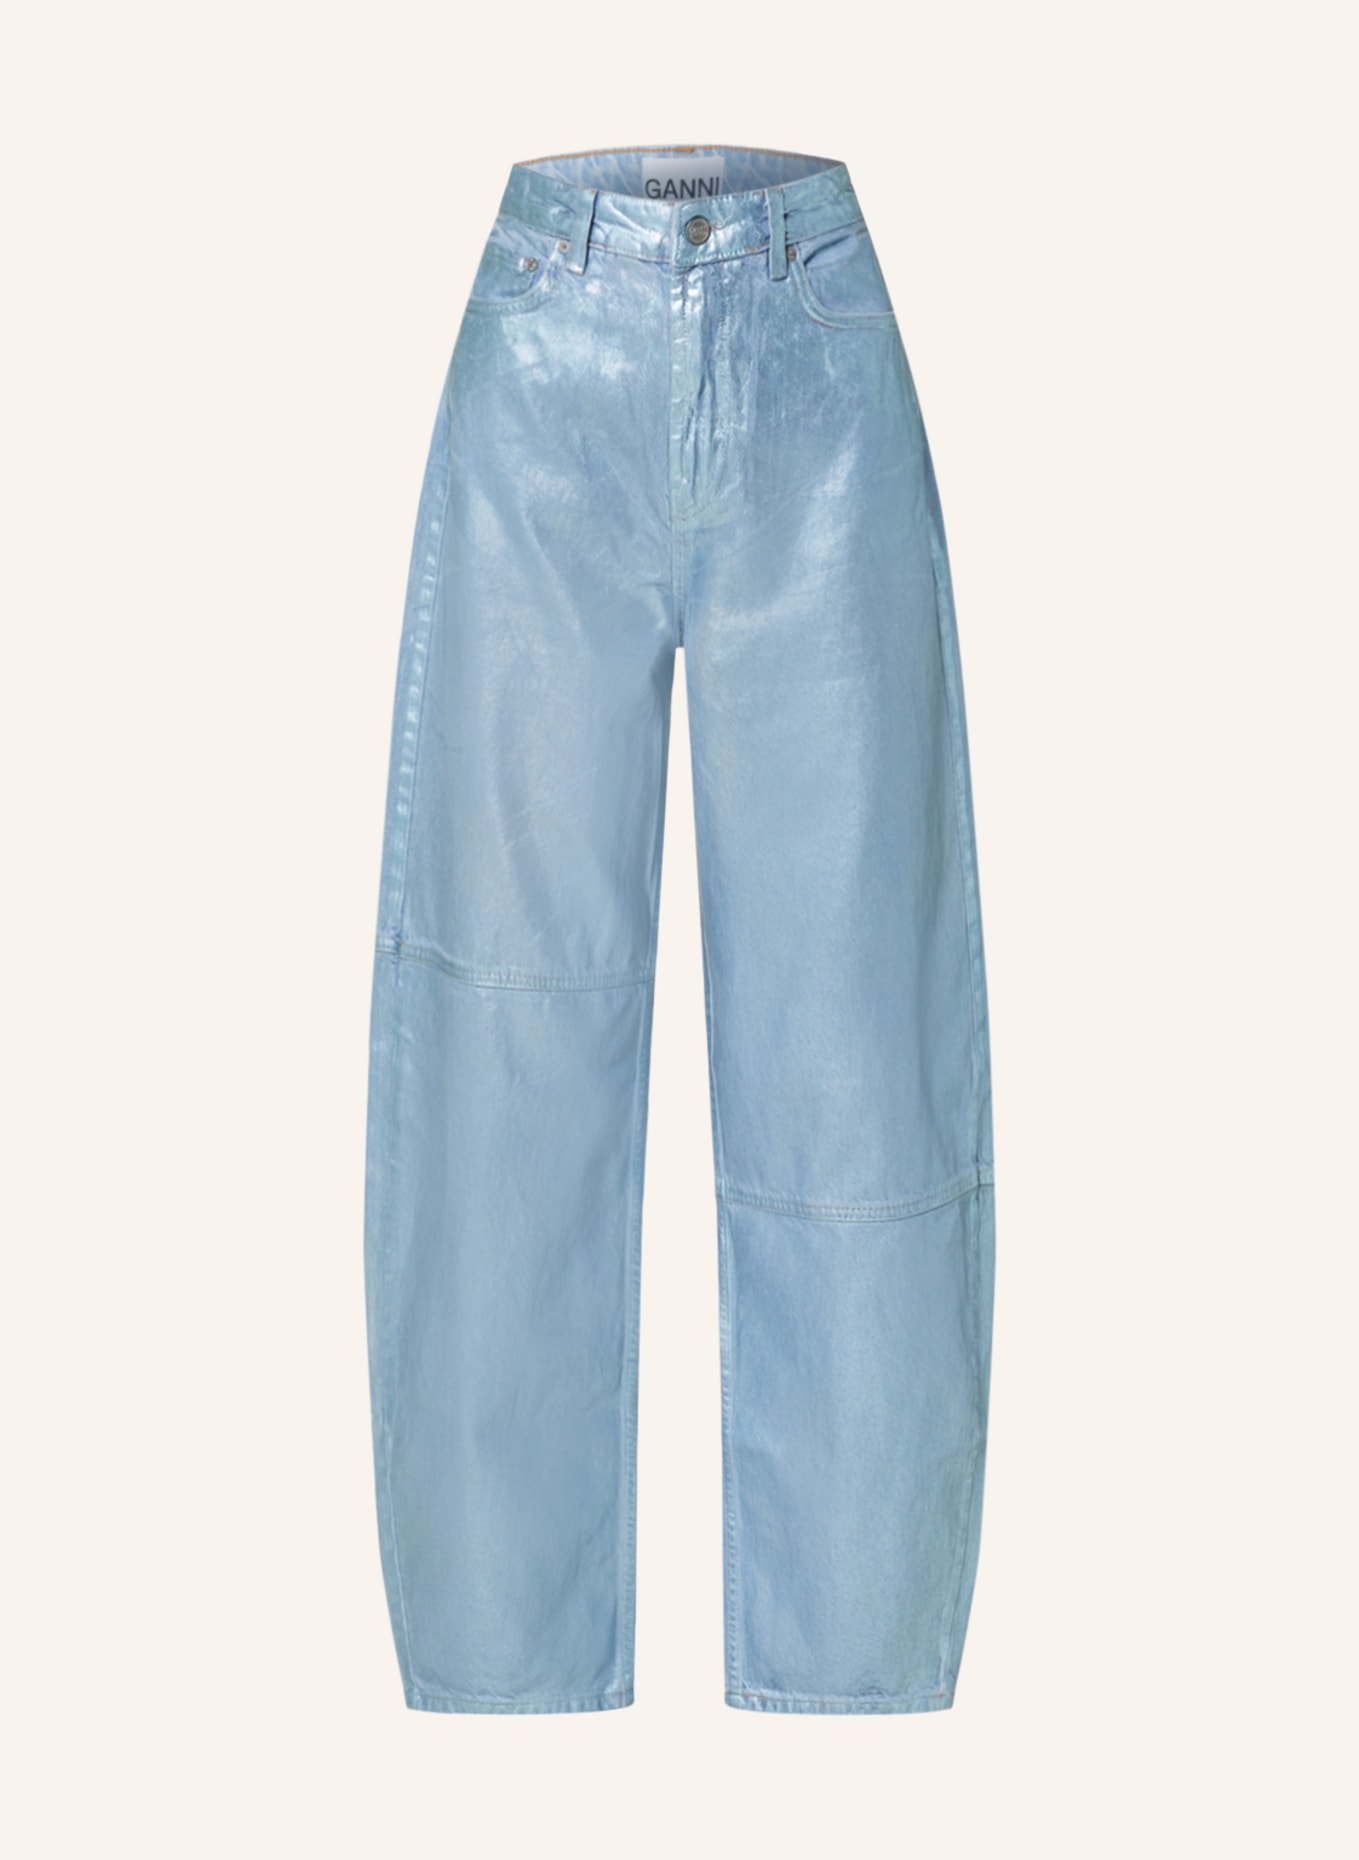 GANNI Coated Jeans, Farbe: 694 HEATHER (Bild 1)